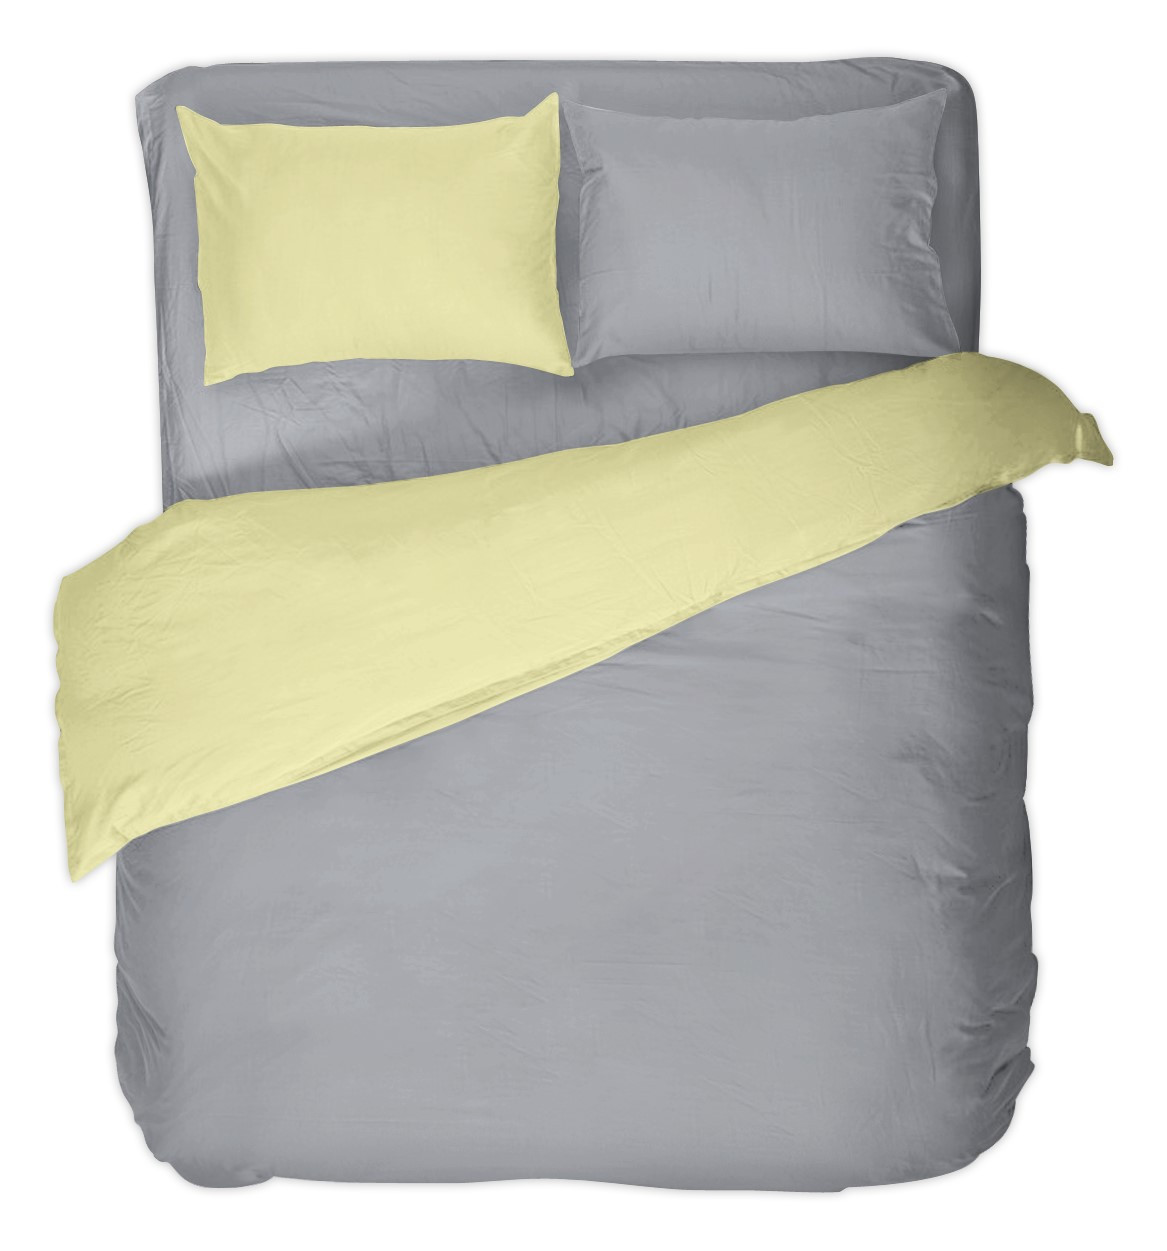 Dilios Bedding Setdark grey/light yellow